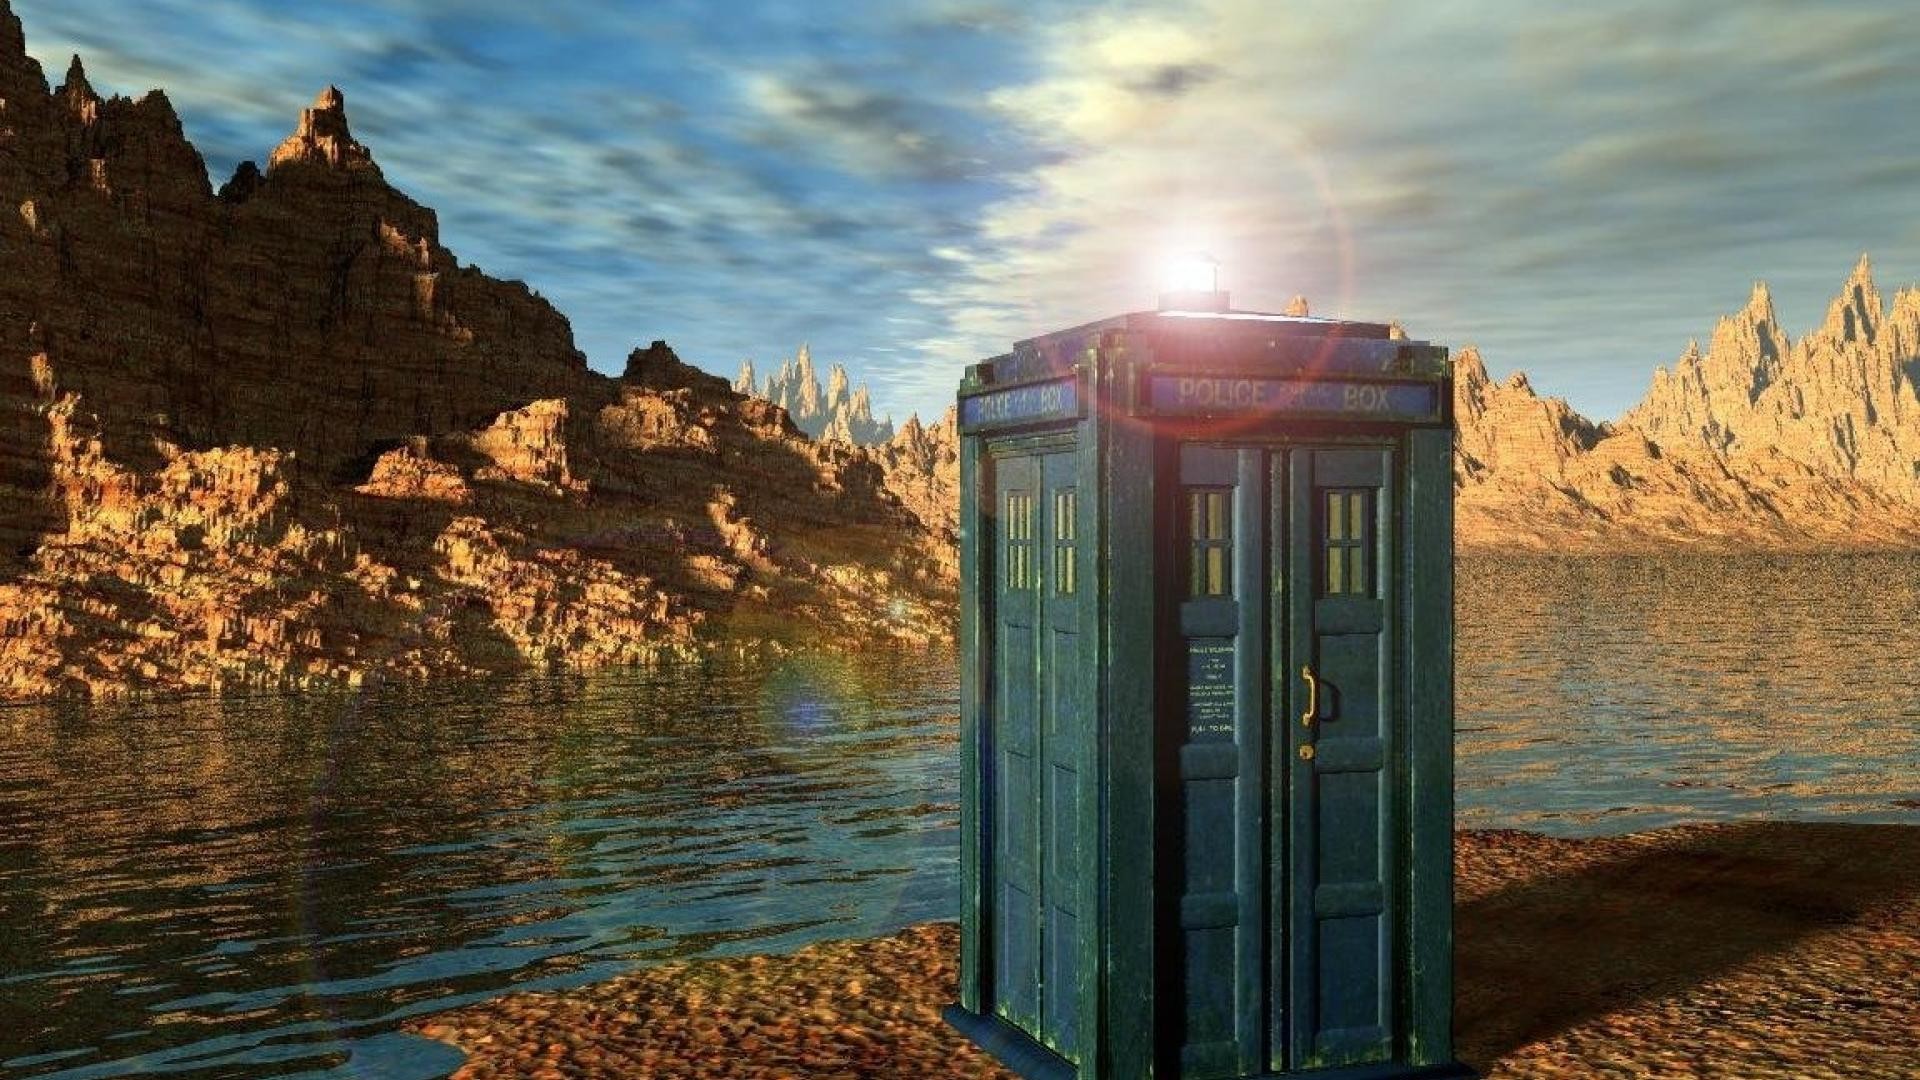 Tardis doctor who movies phone box hd wallpaper – HQ